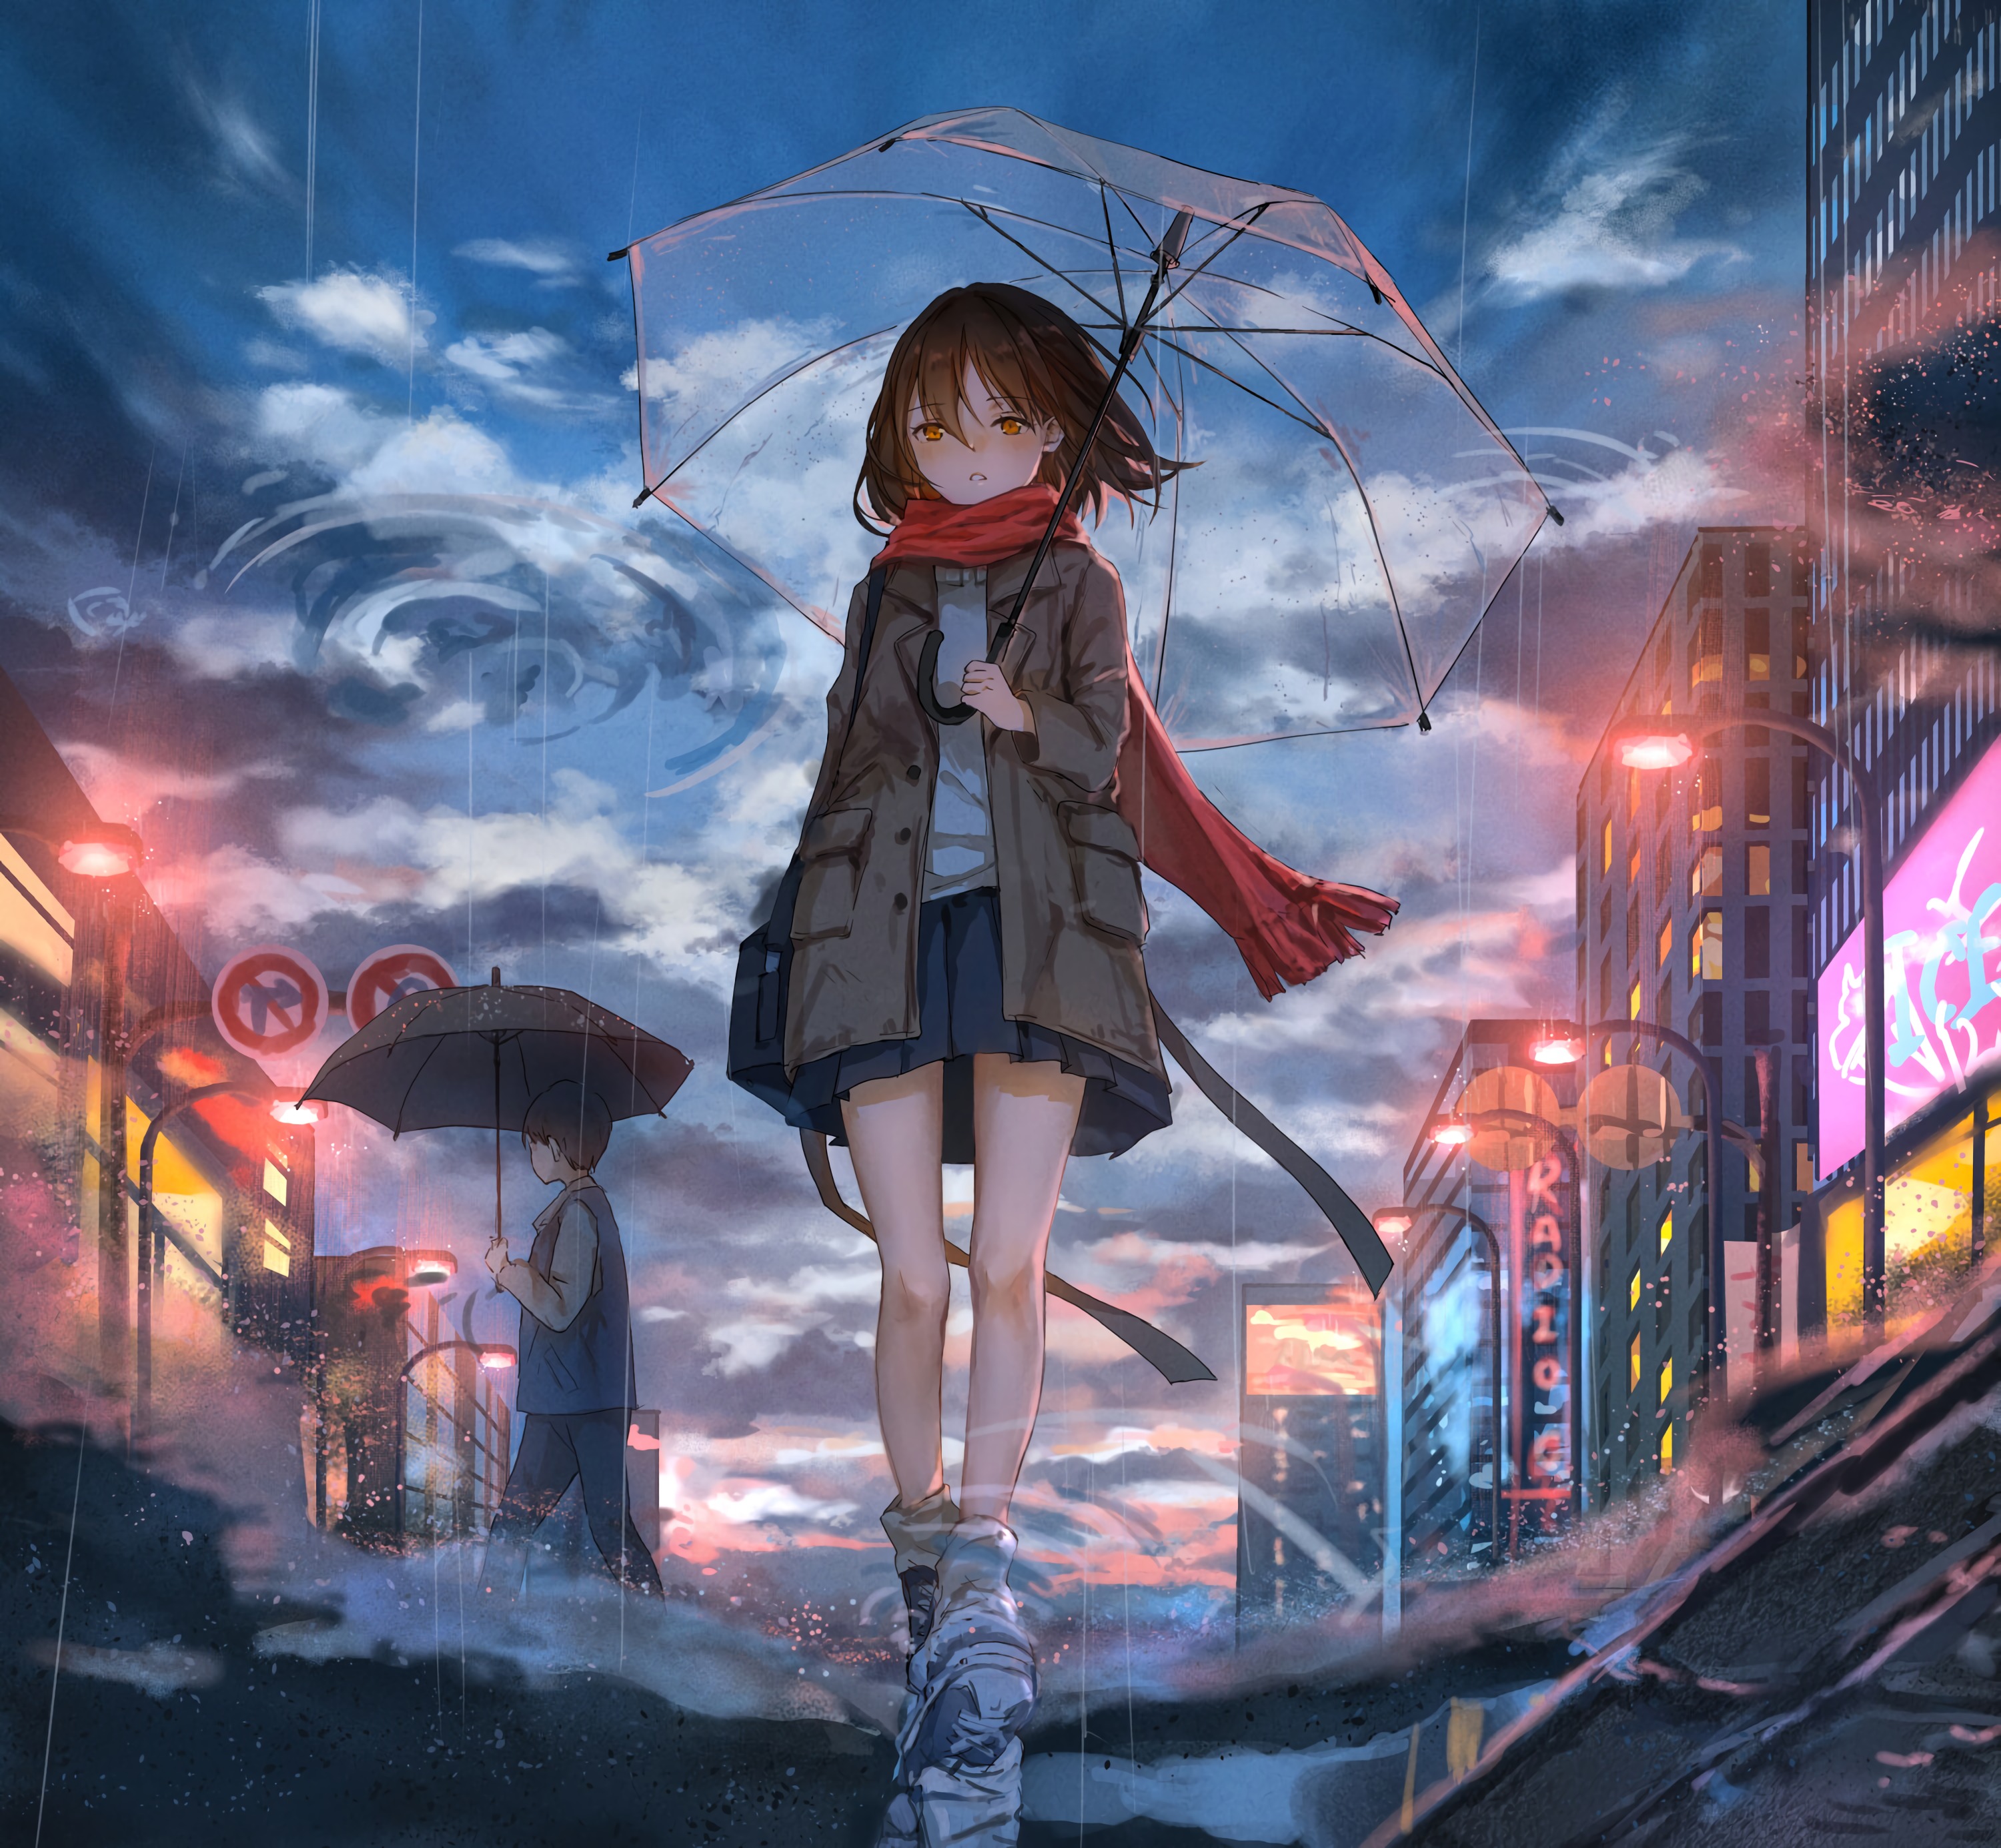 android anime, sadness, girl, umbrella, rain, sorrow